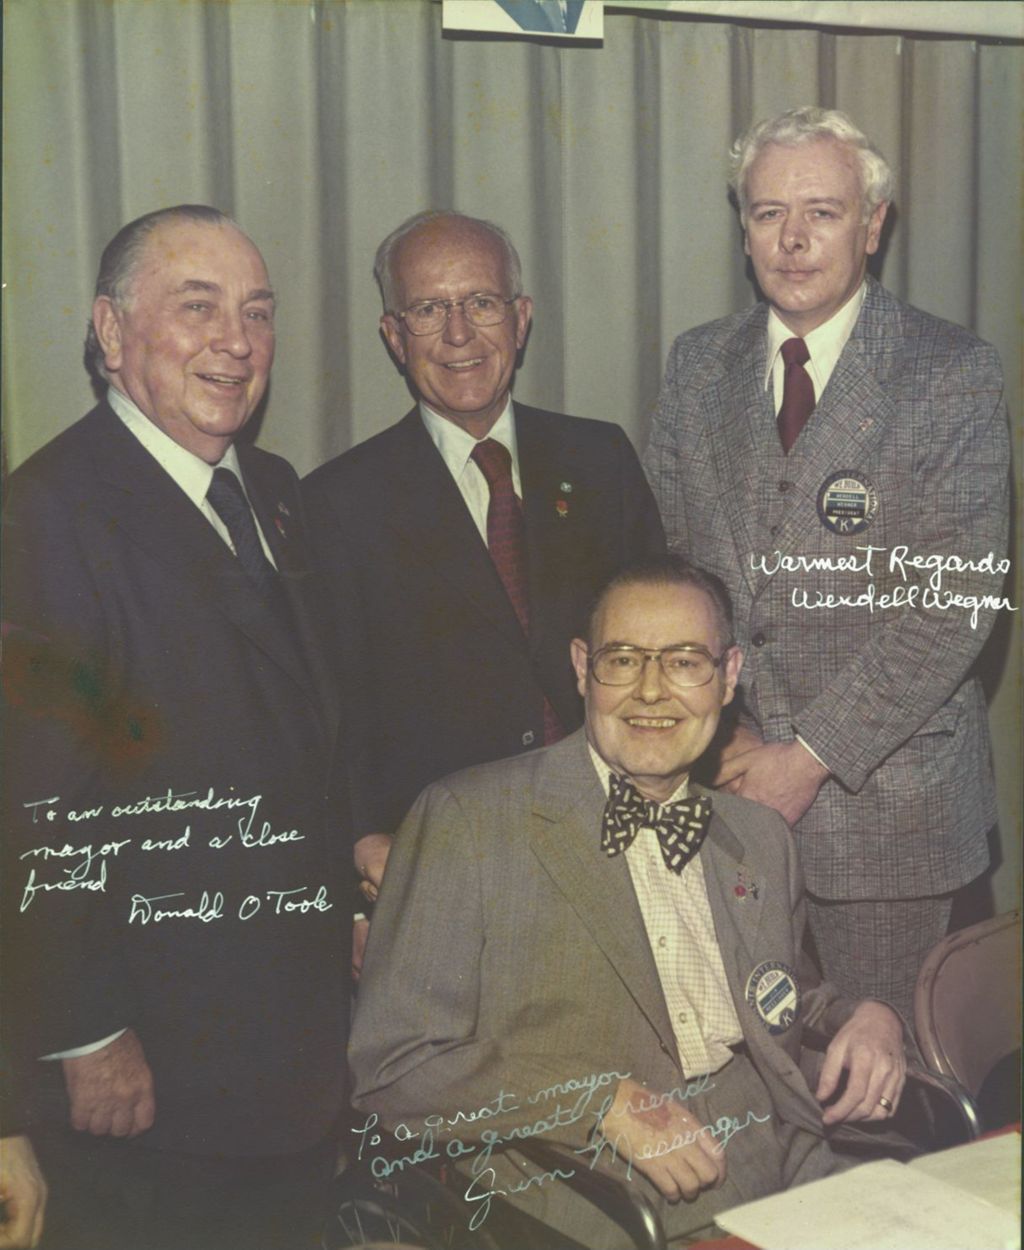 Richard J. Daley, Jim Messinger, Wendell Wegner, and Donald O'Toole